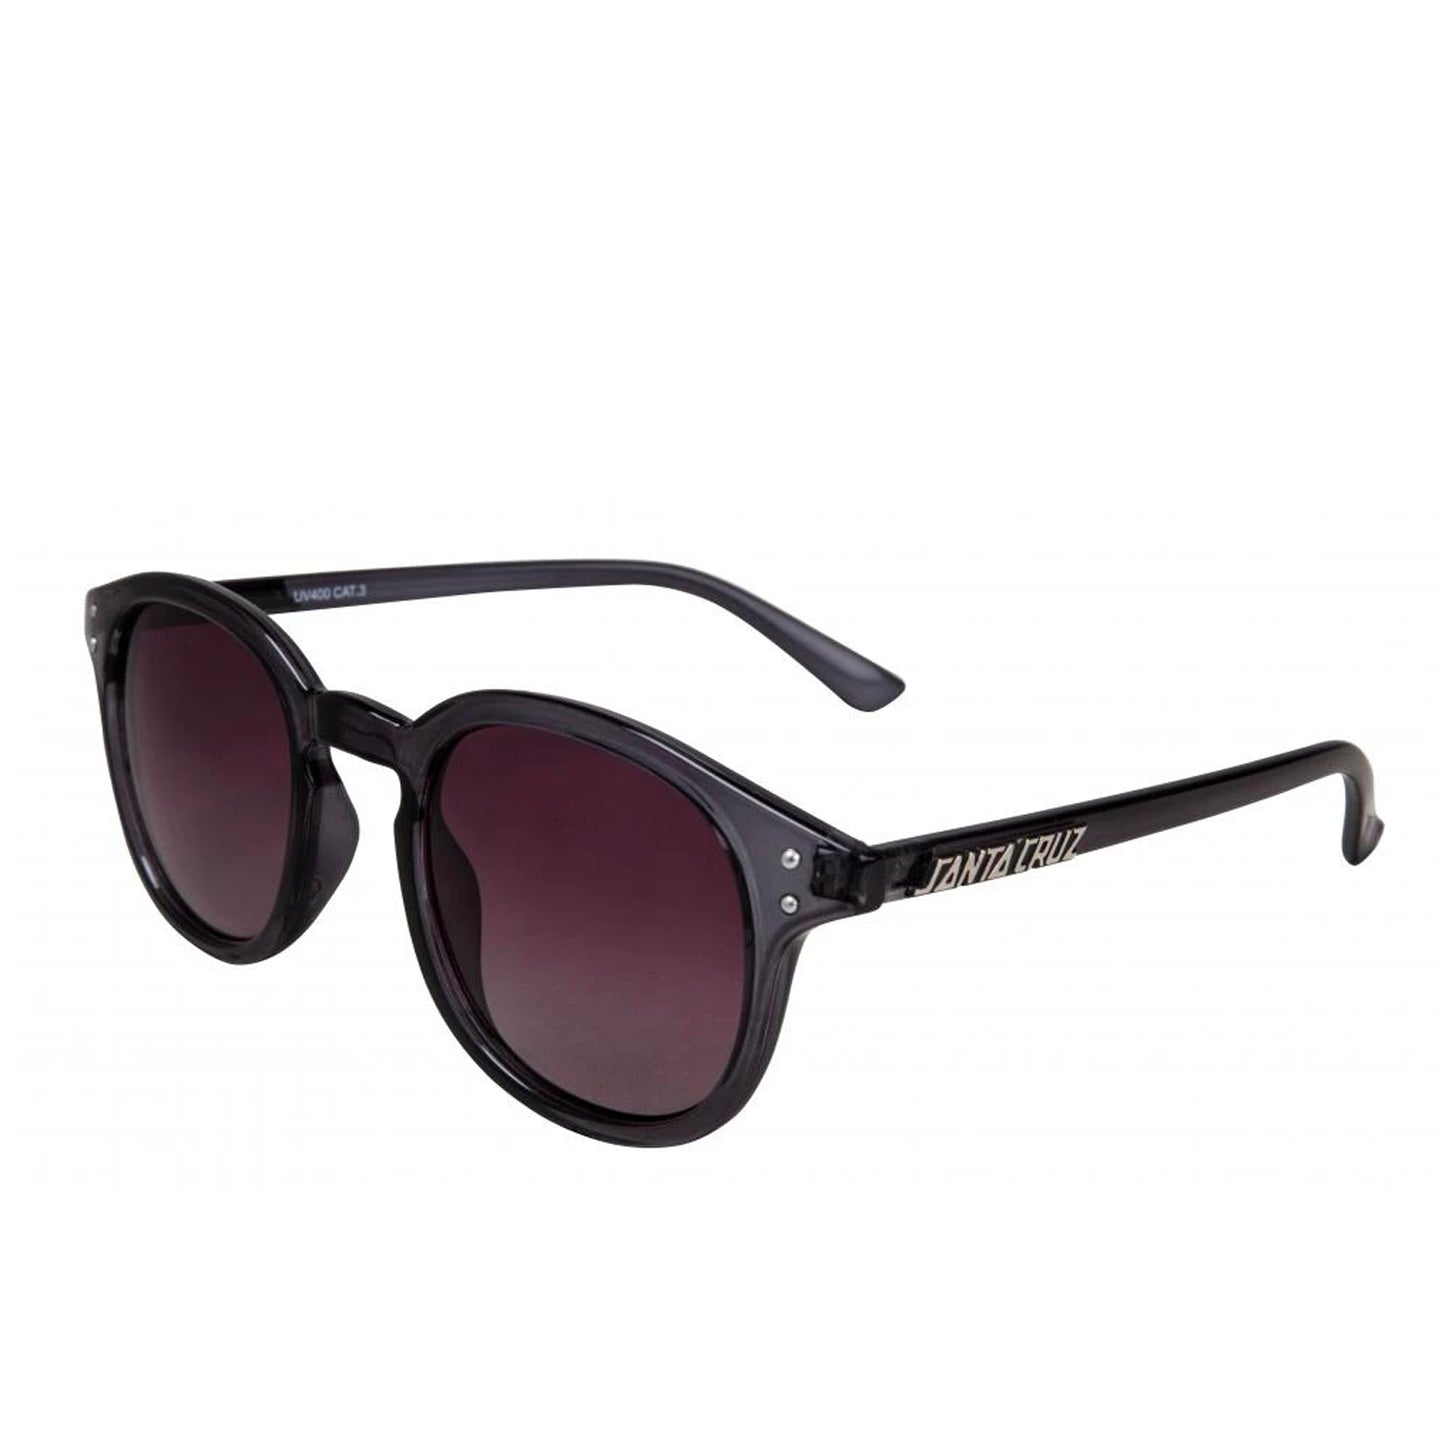 Santa Cruz Watson Sunglasses - Black - Prime Delux Store